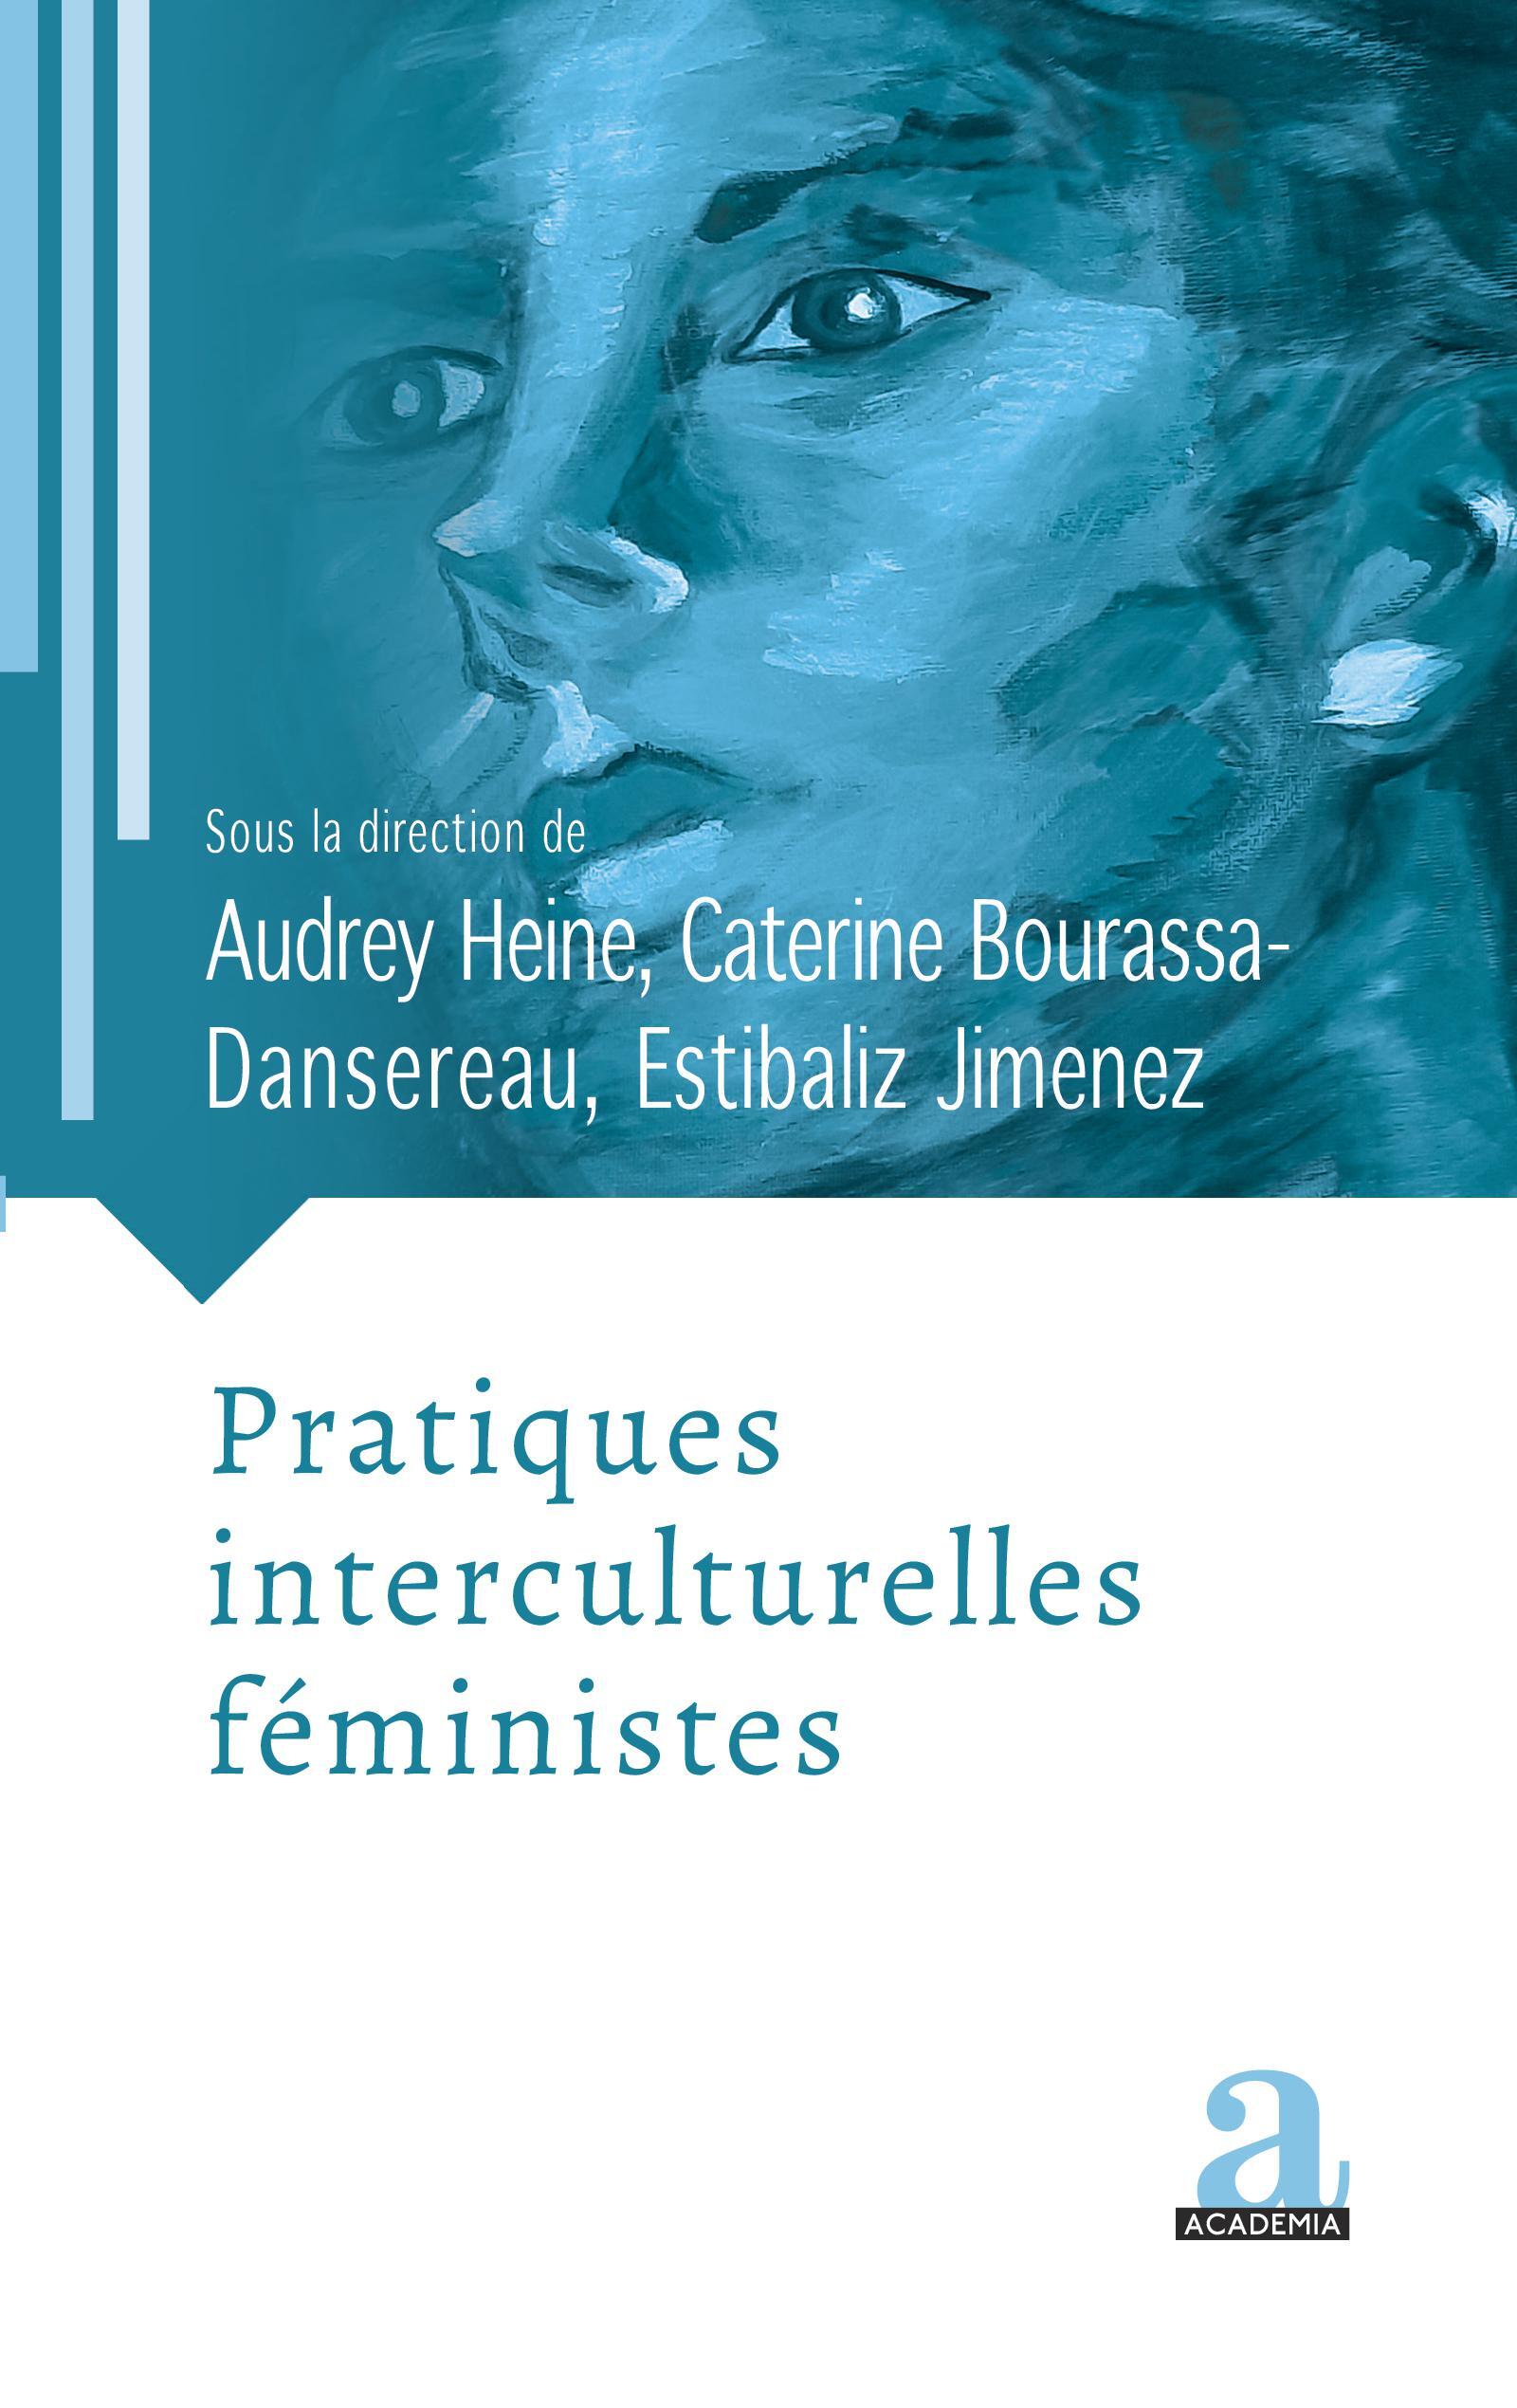 Pratiques interculturelles féministes (9782806132239-front-cover)